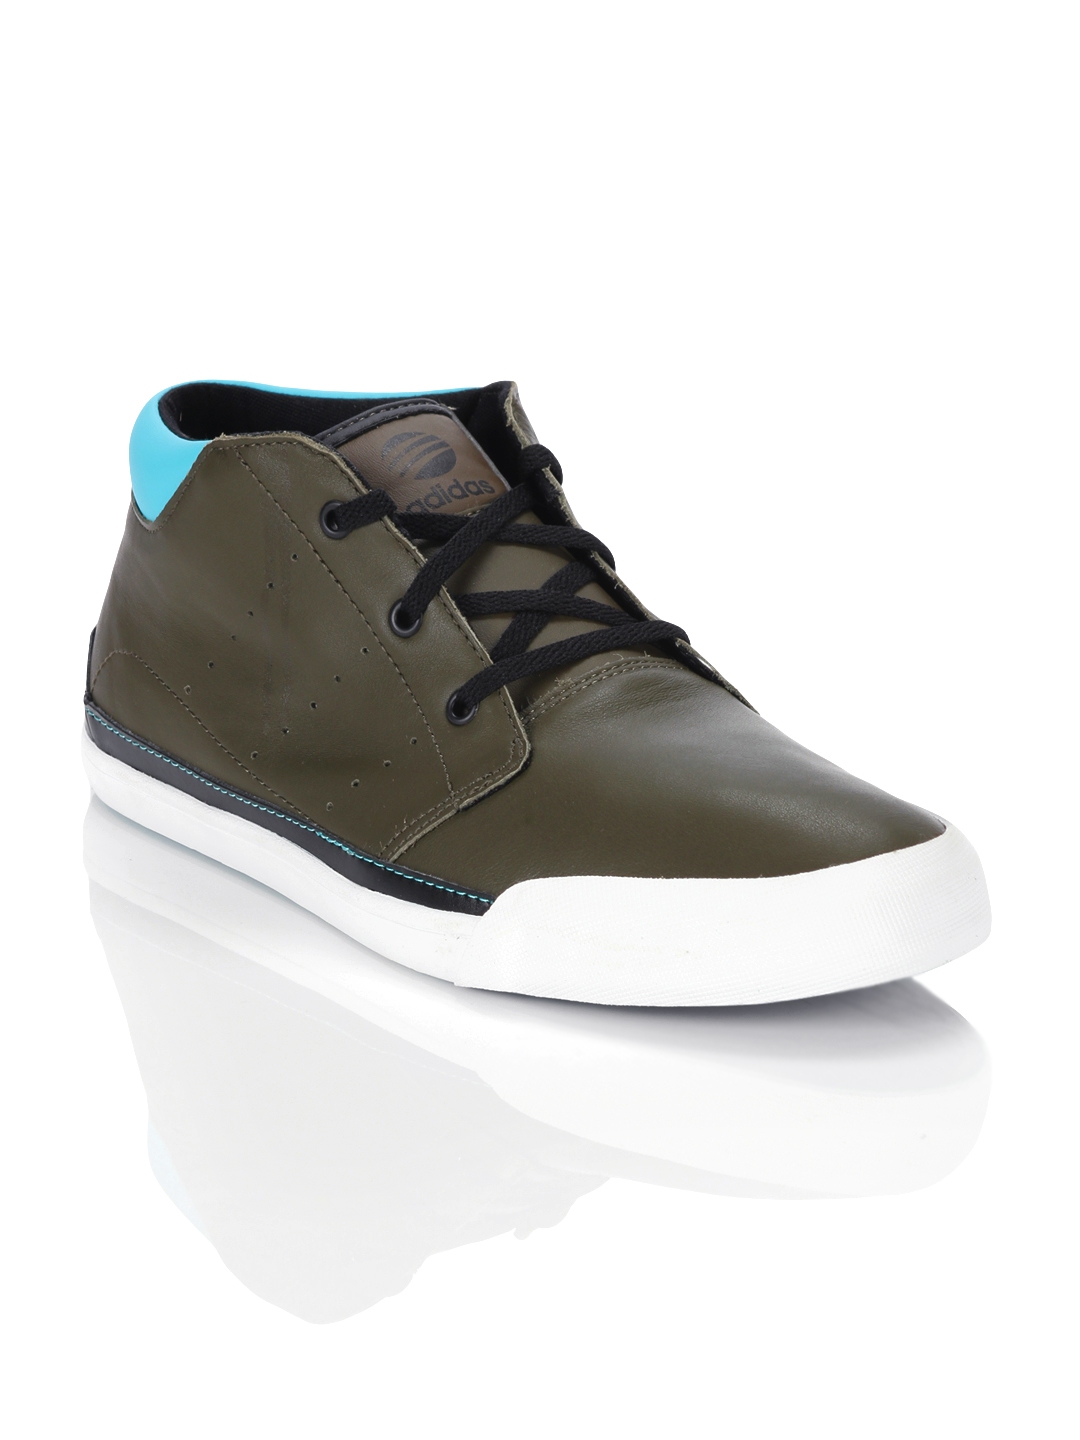 Buy ADIDAS Neo Men Ez Desert Boot Olive Shoes - Boots for Men 33763 ...